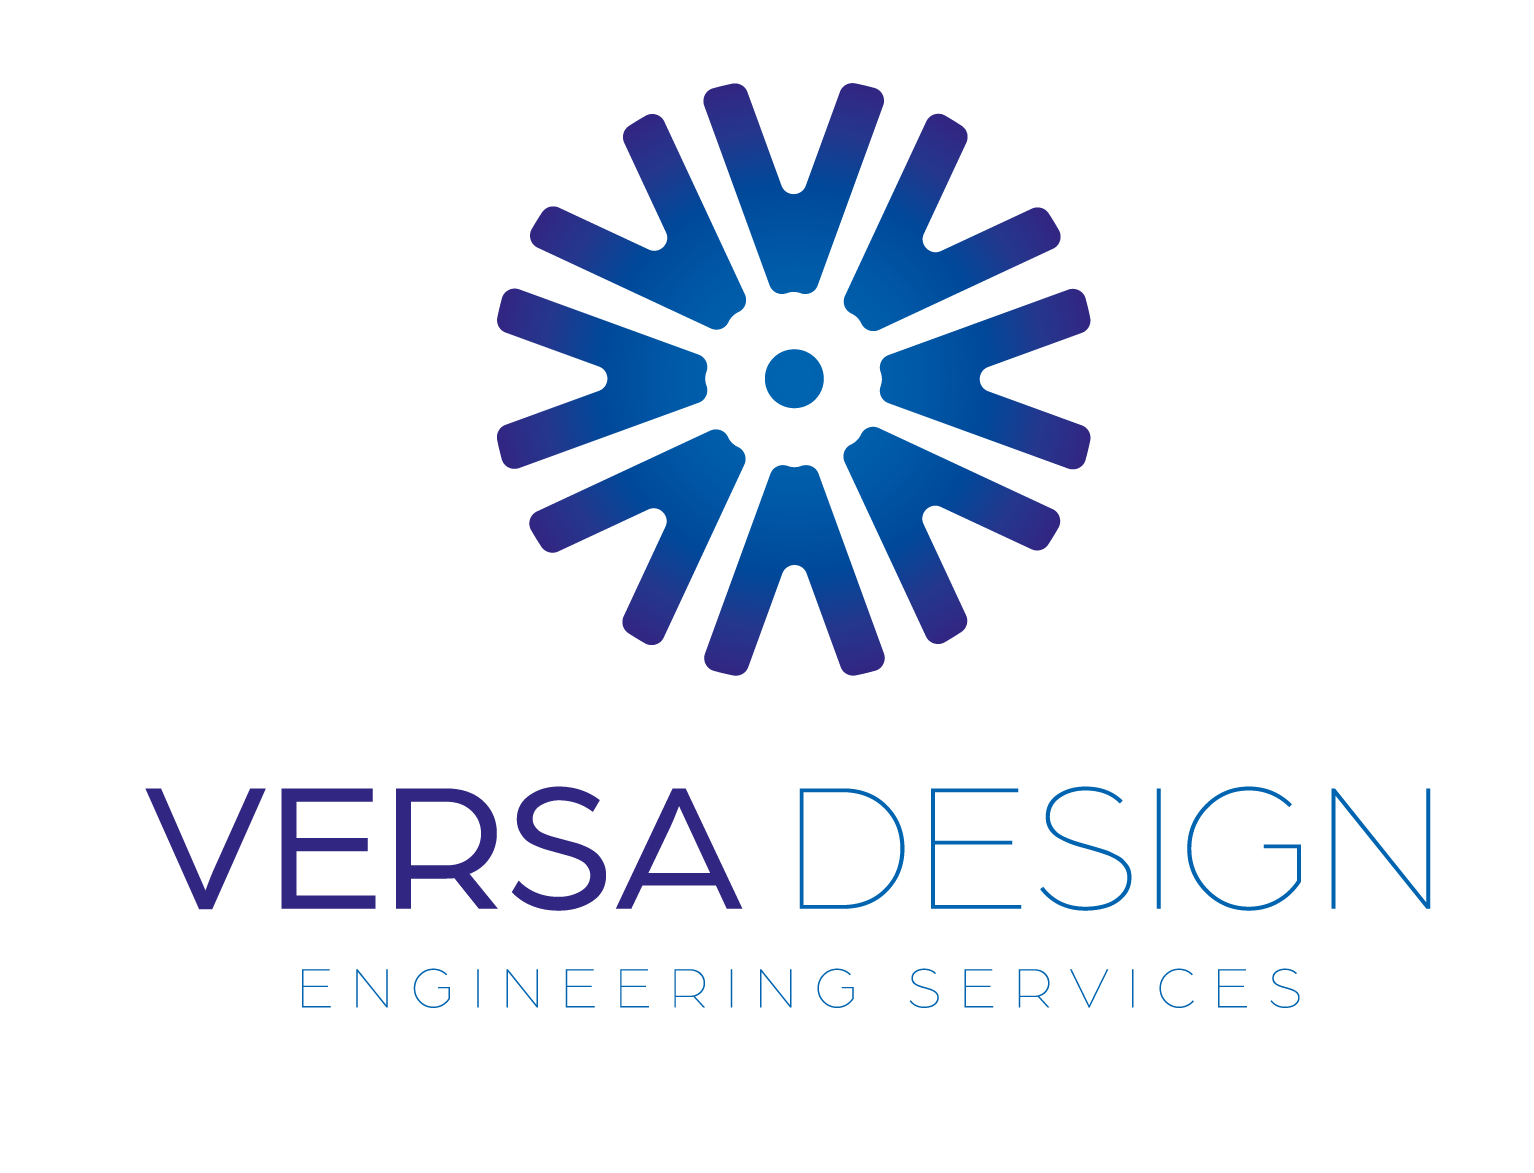 Versa Design logo